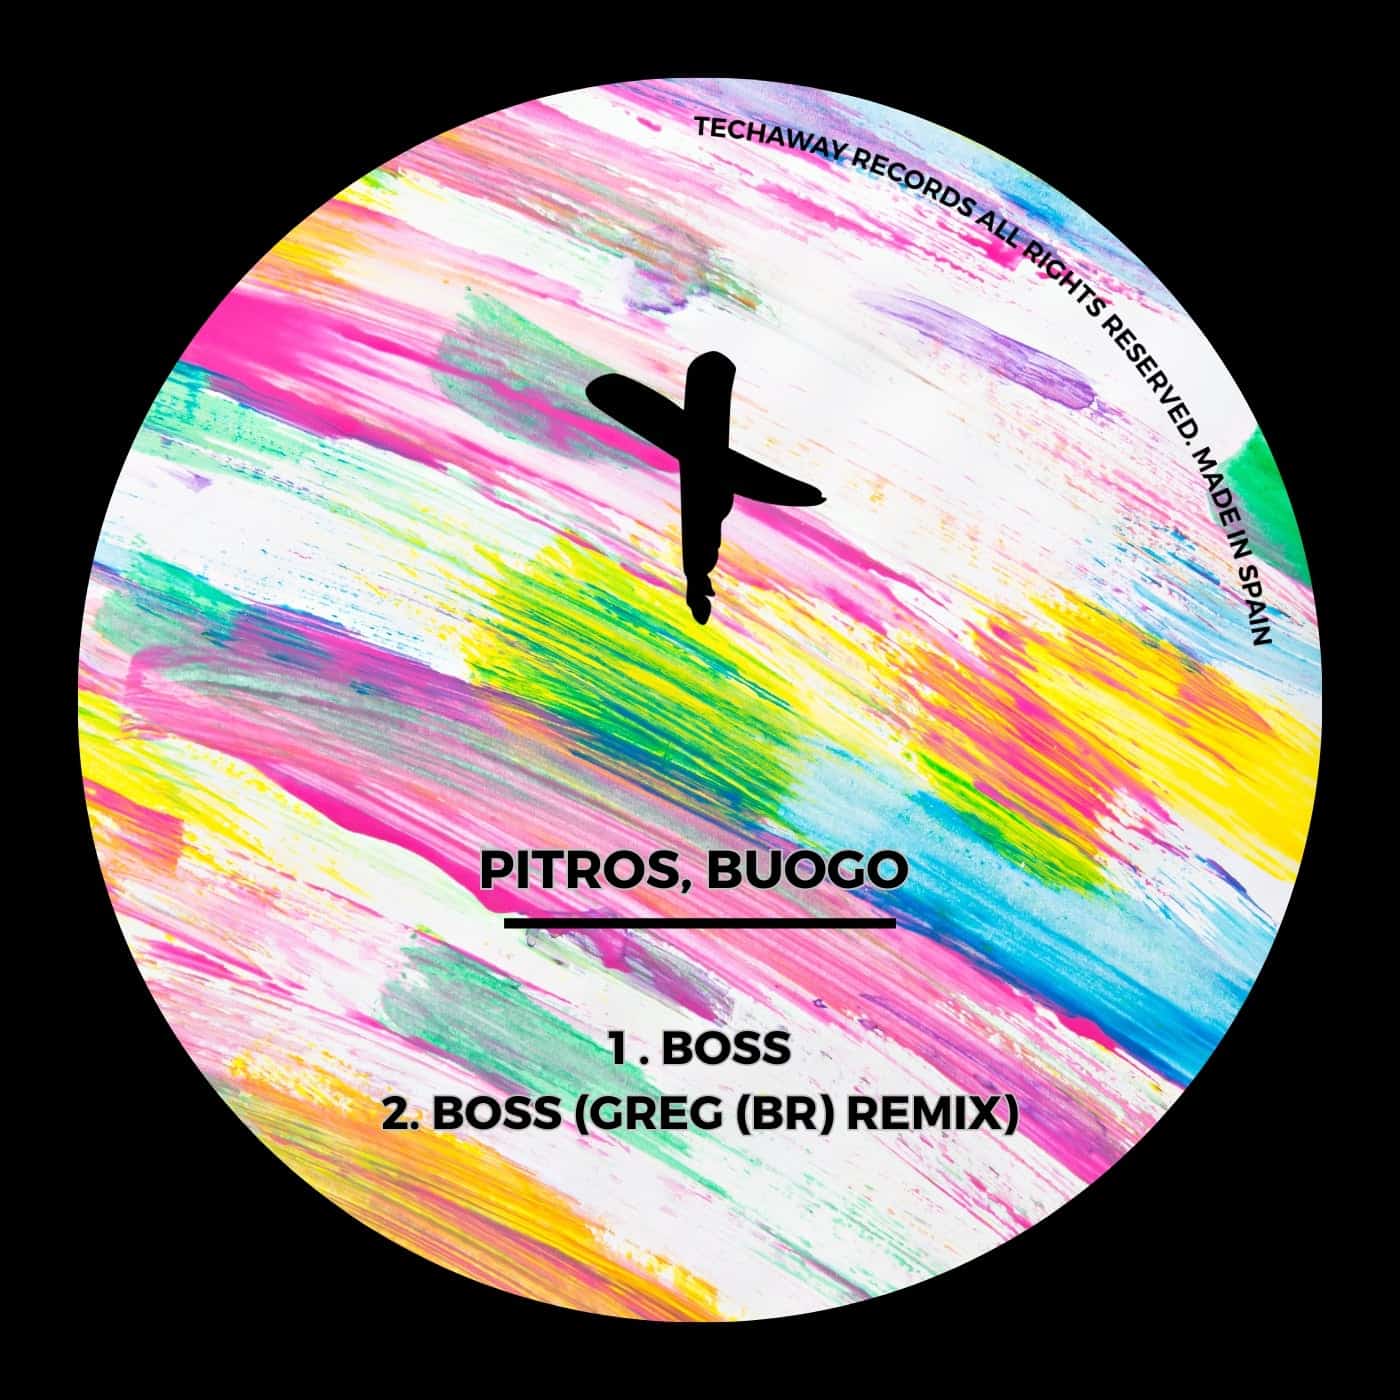 image cover: Pitros, Buogo - Boss on Techaway Records